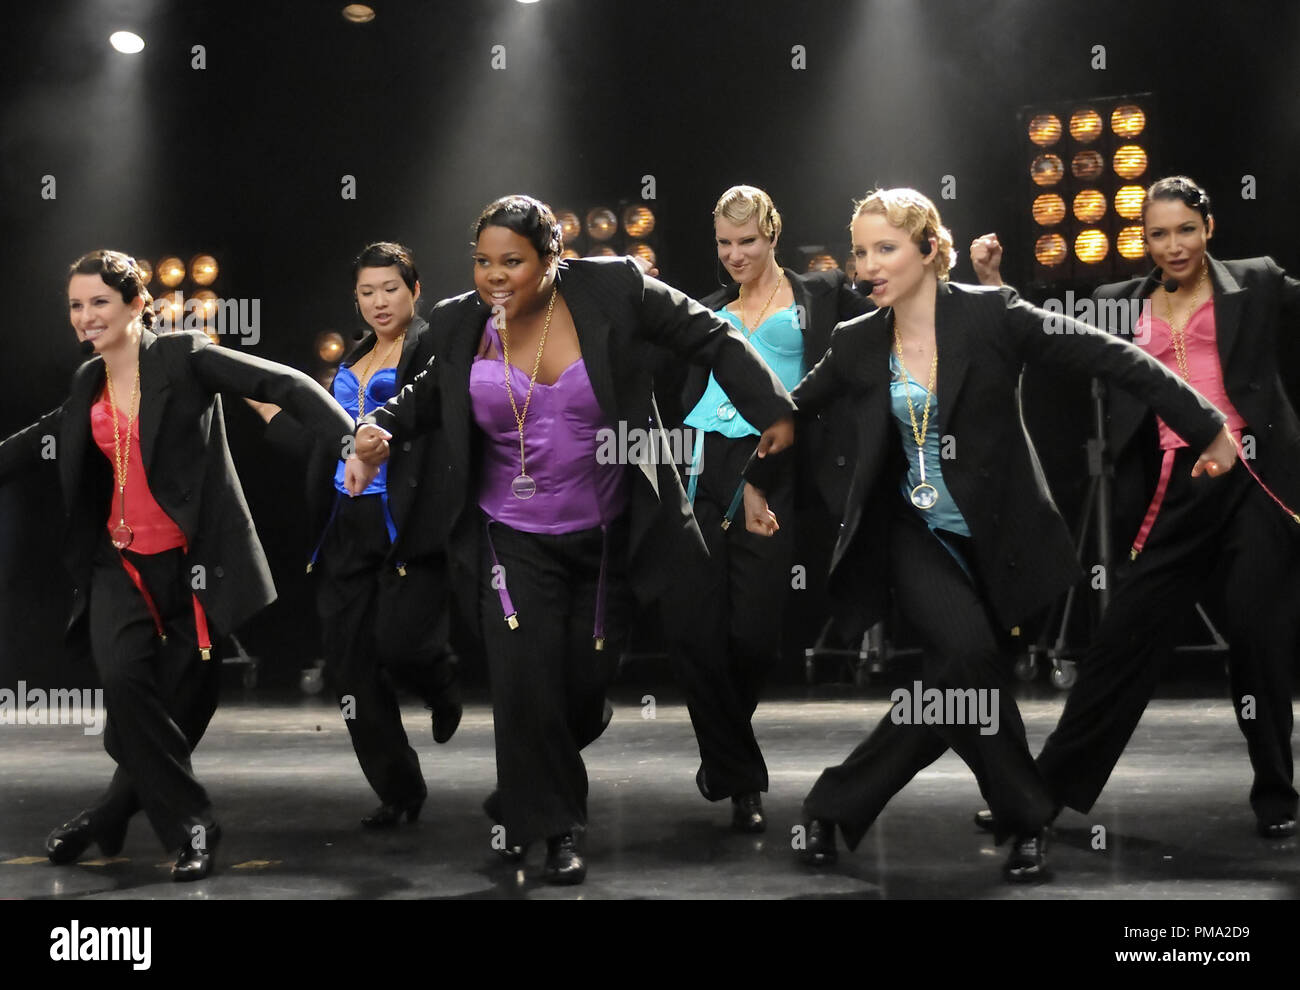 "Glee' stagione 1 (2009 - 2010) Glee Cast: raffigurato L-R: Naya Rivera, Amber Riley, Lea Michele, Heather Morris, Dianna Agron e Jenna Ushkowitz. Foto Stock